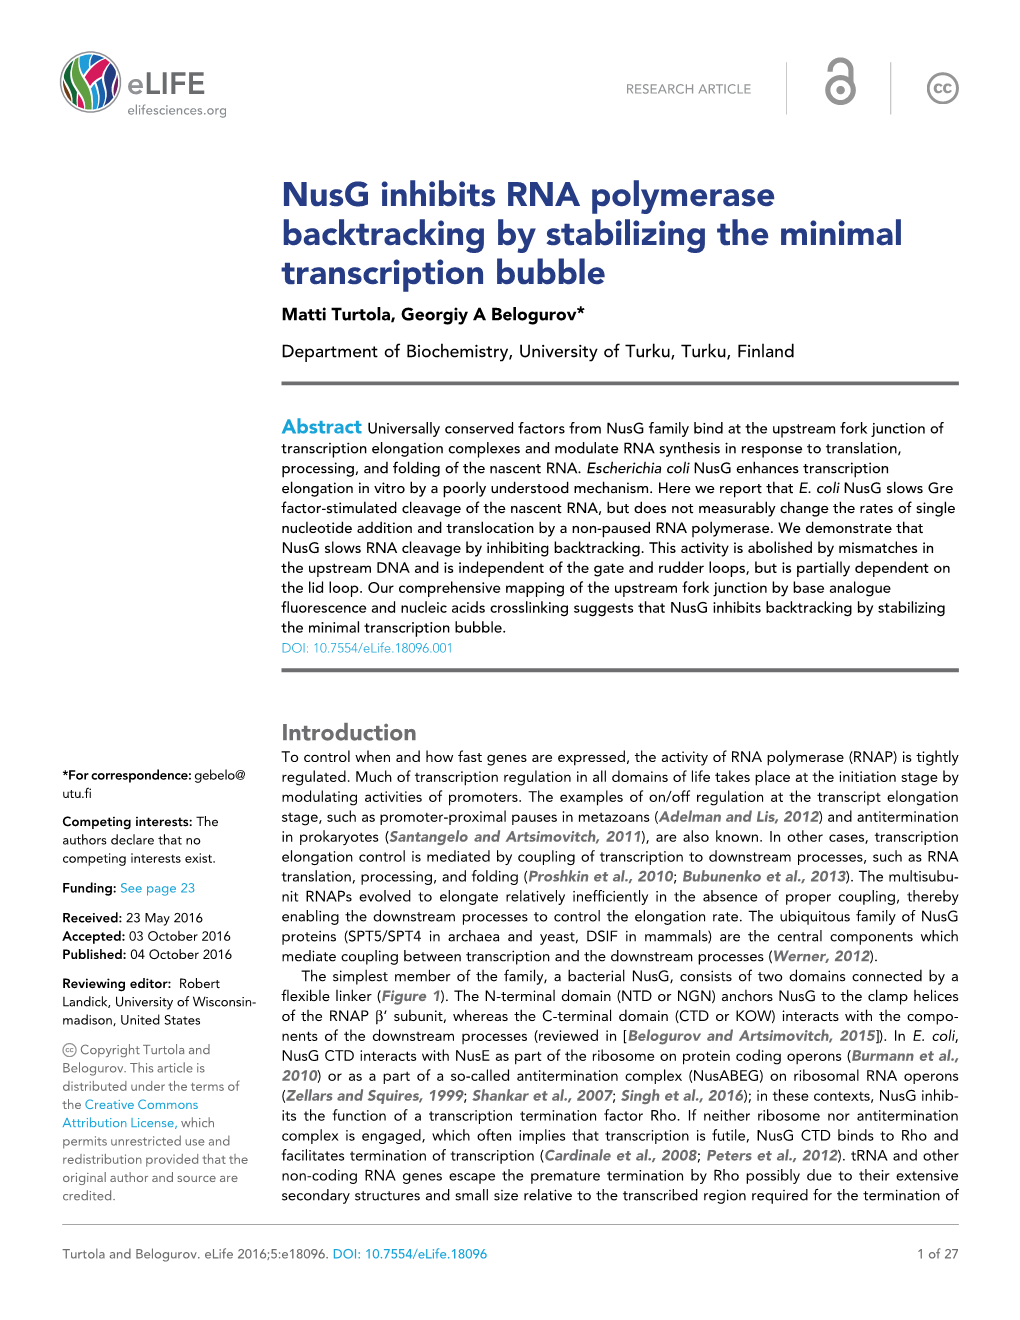 Nusg Inhibits RNA Polymerase Backtracking by Stabilizing the Minimal Transcription Bubble Matti Turtola, Georgiy a Belogurov*